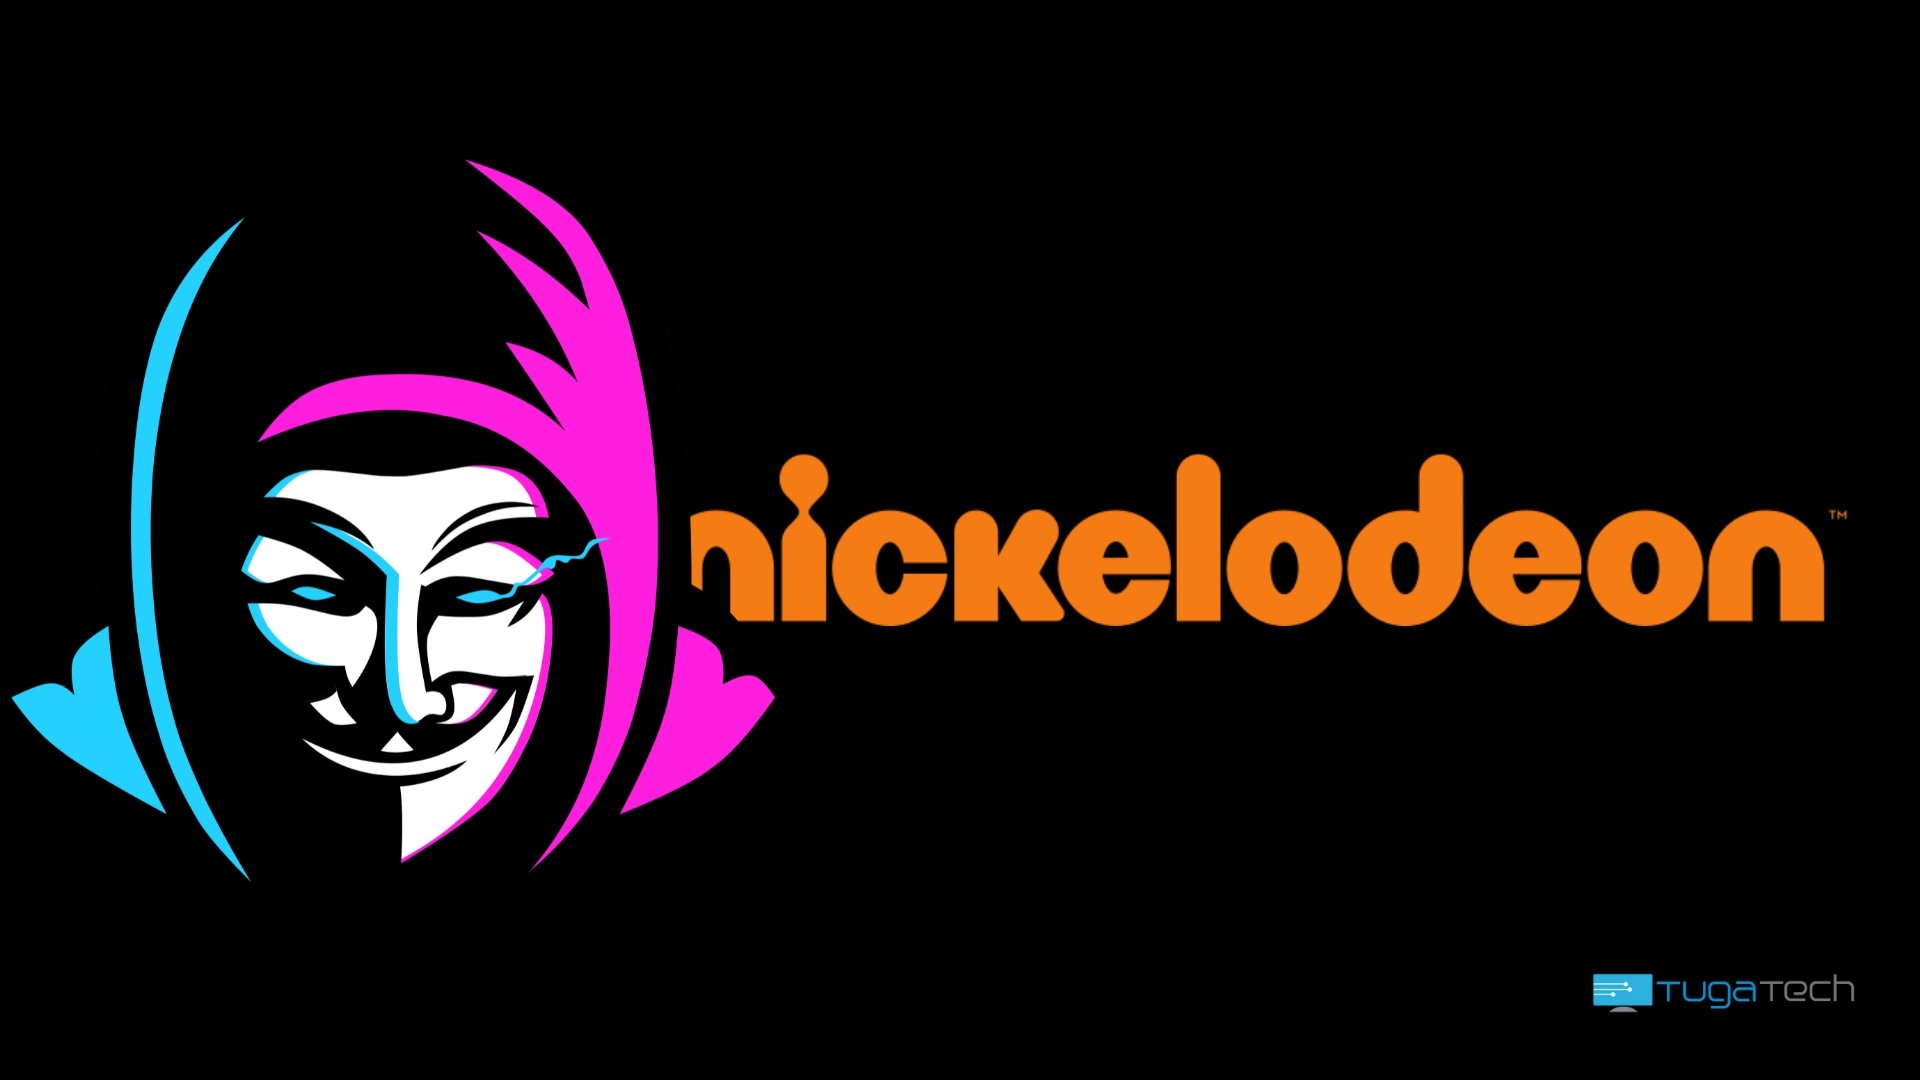 Nickelodeon sobre imagem de hacker